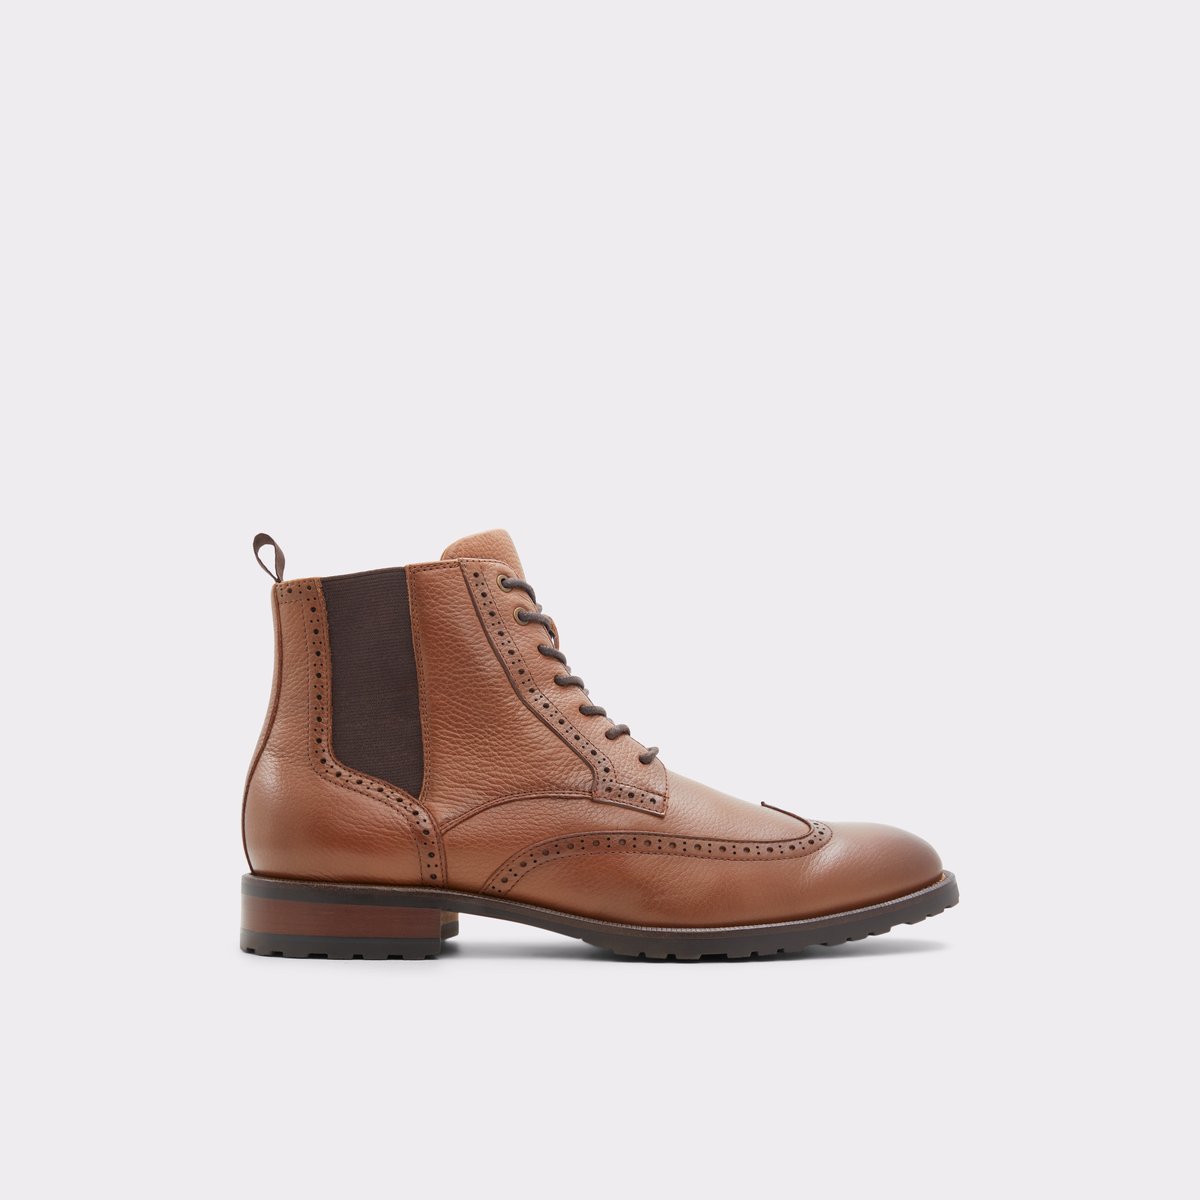 Salinger Other Brown Men's Dress boots | ALDO Canada